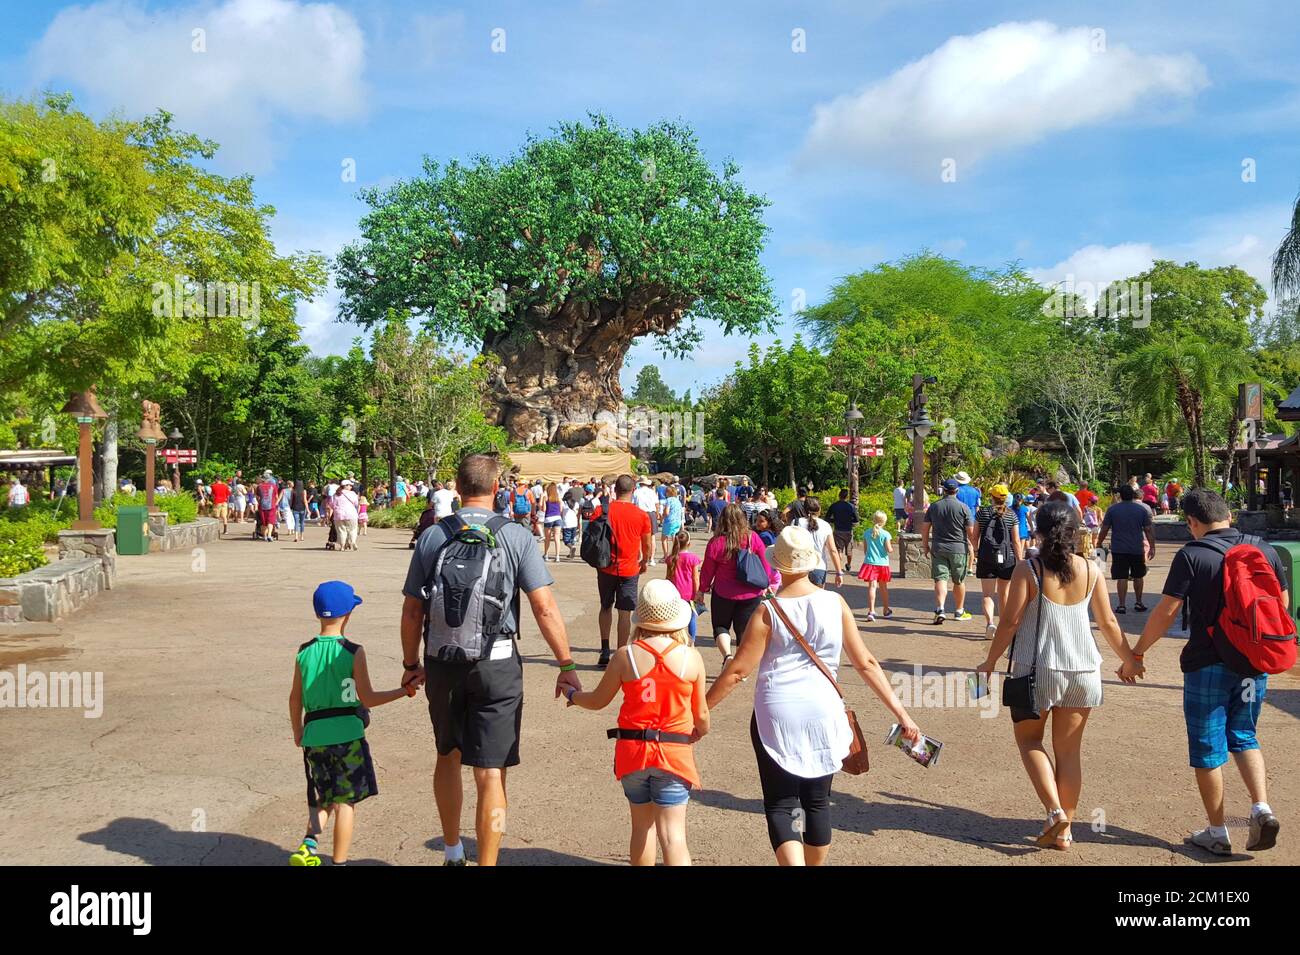 Disney World patrons head to the Tree of Life in Animal Kingdom, Discovery Island area, Orlando, Florida, United States Stock Photo